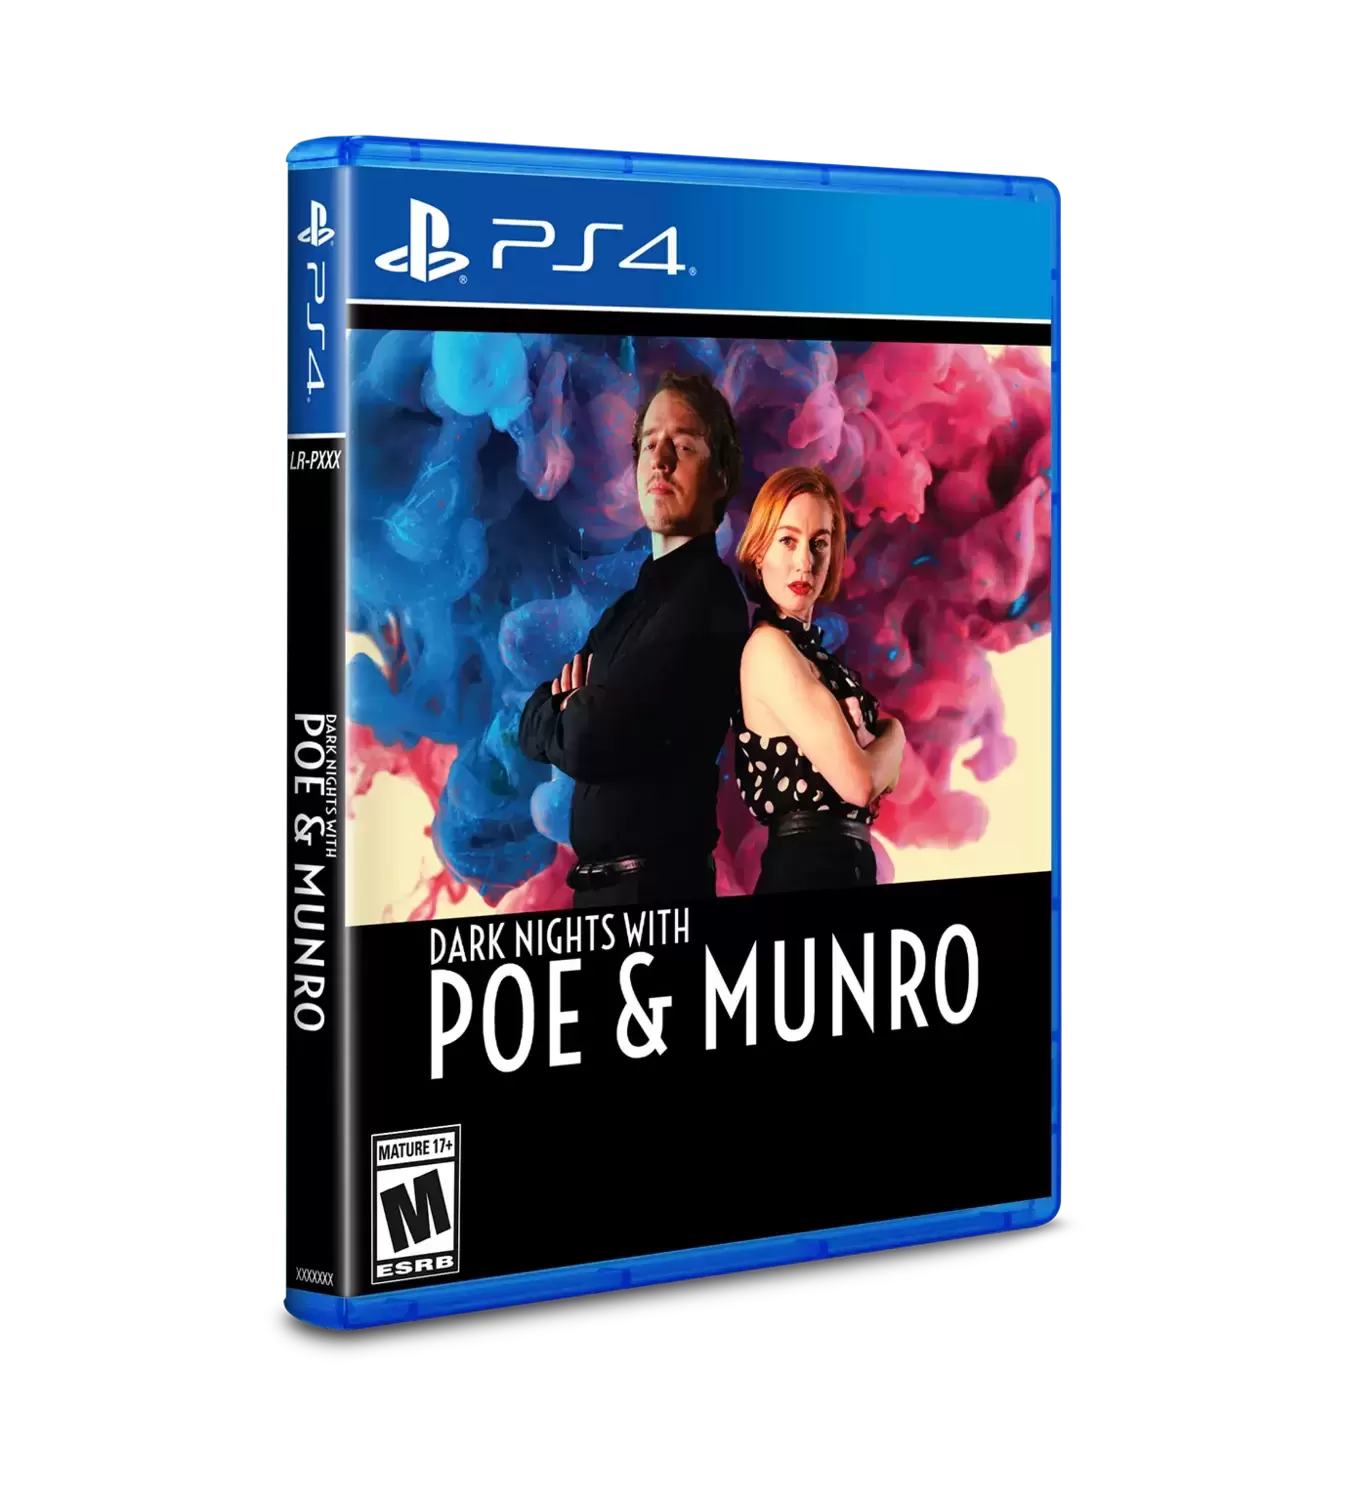 PS4 Games - Dark Nights With Poe & Munro